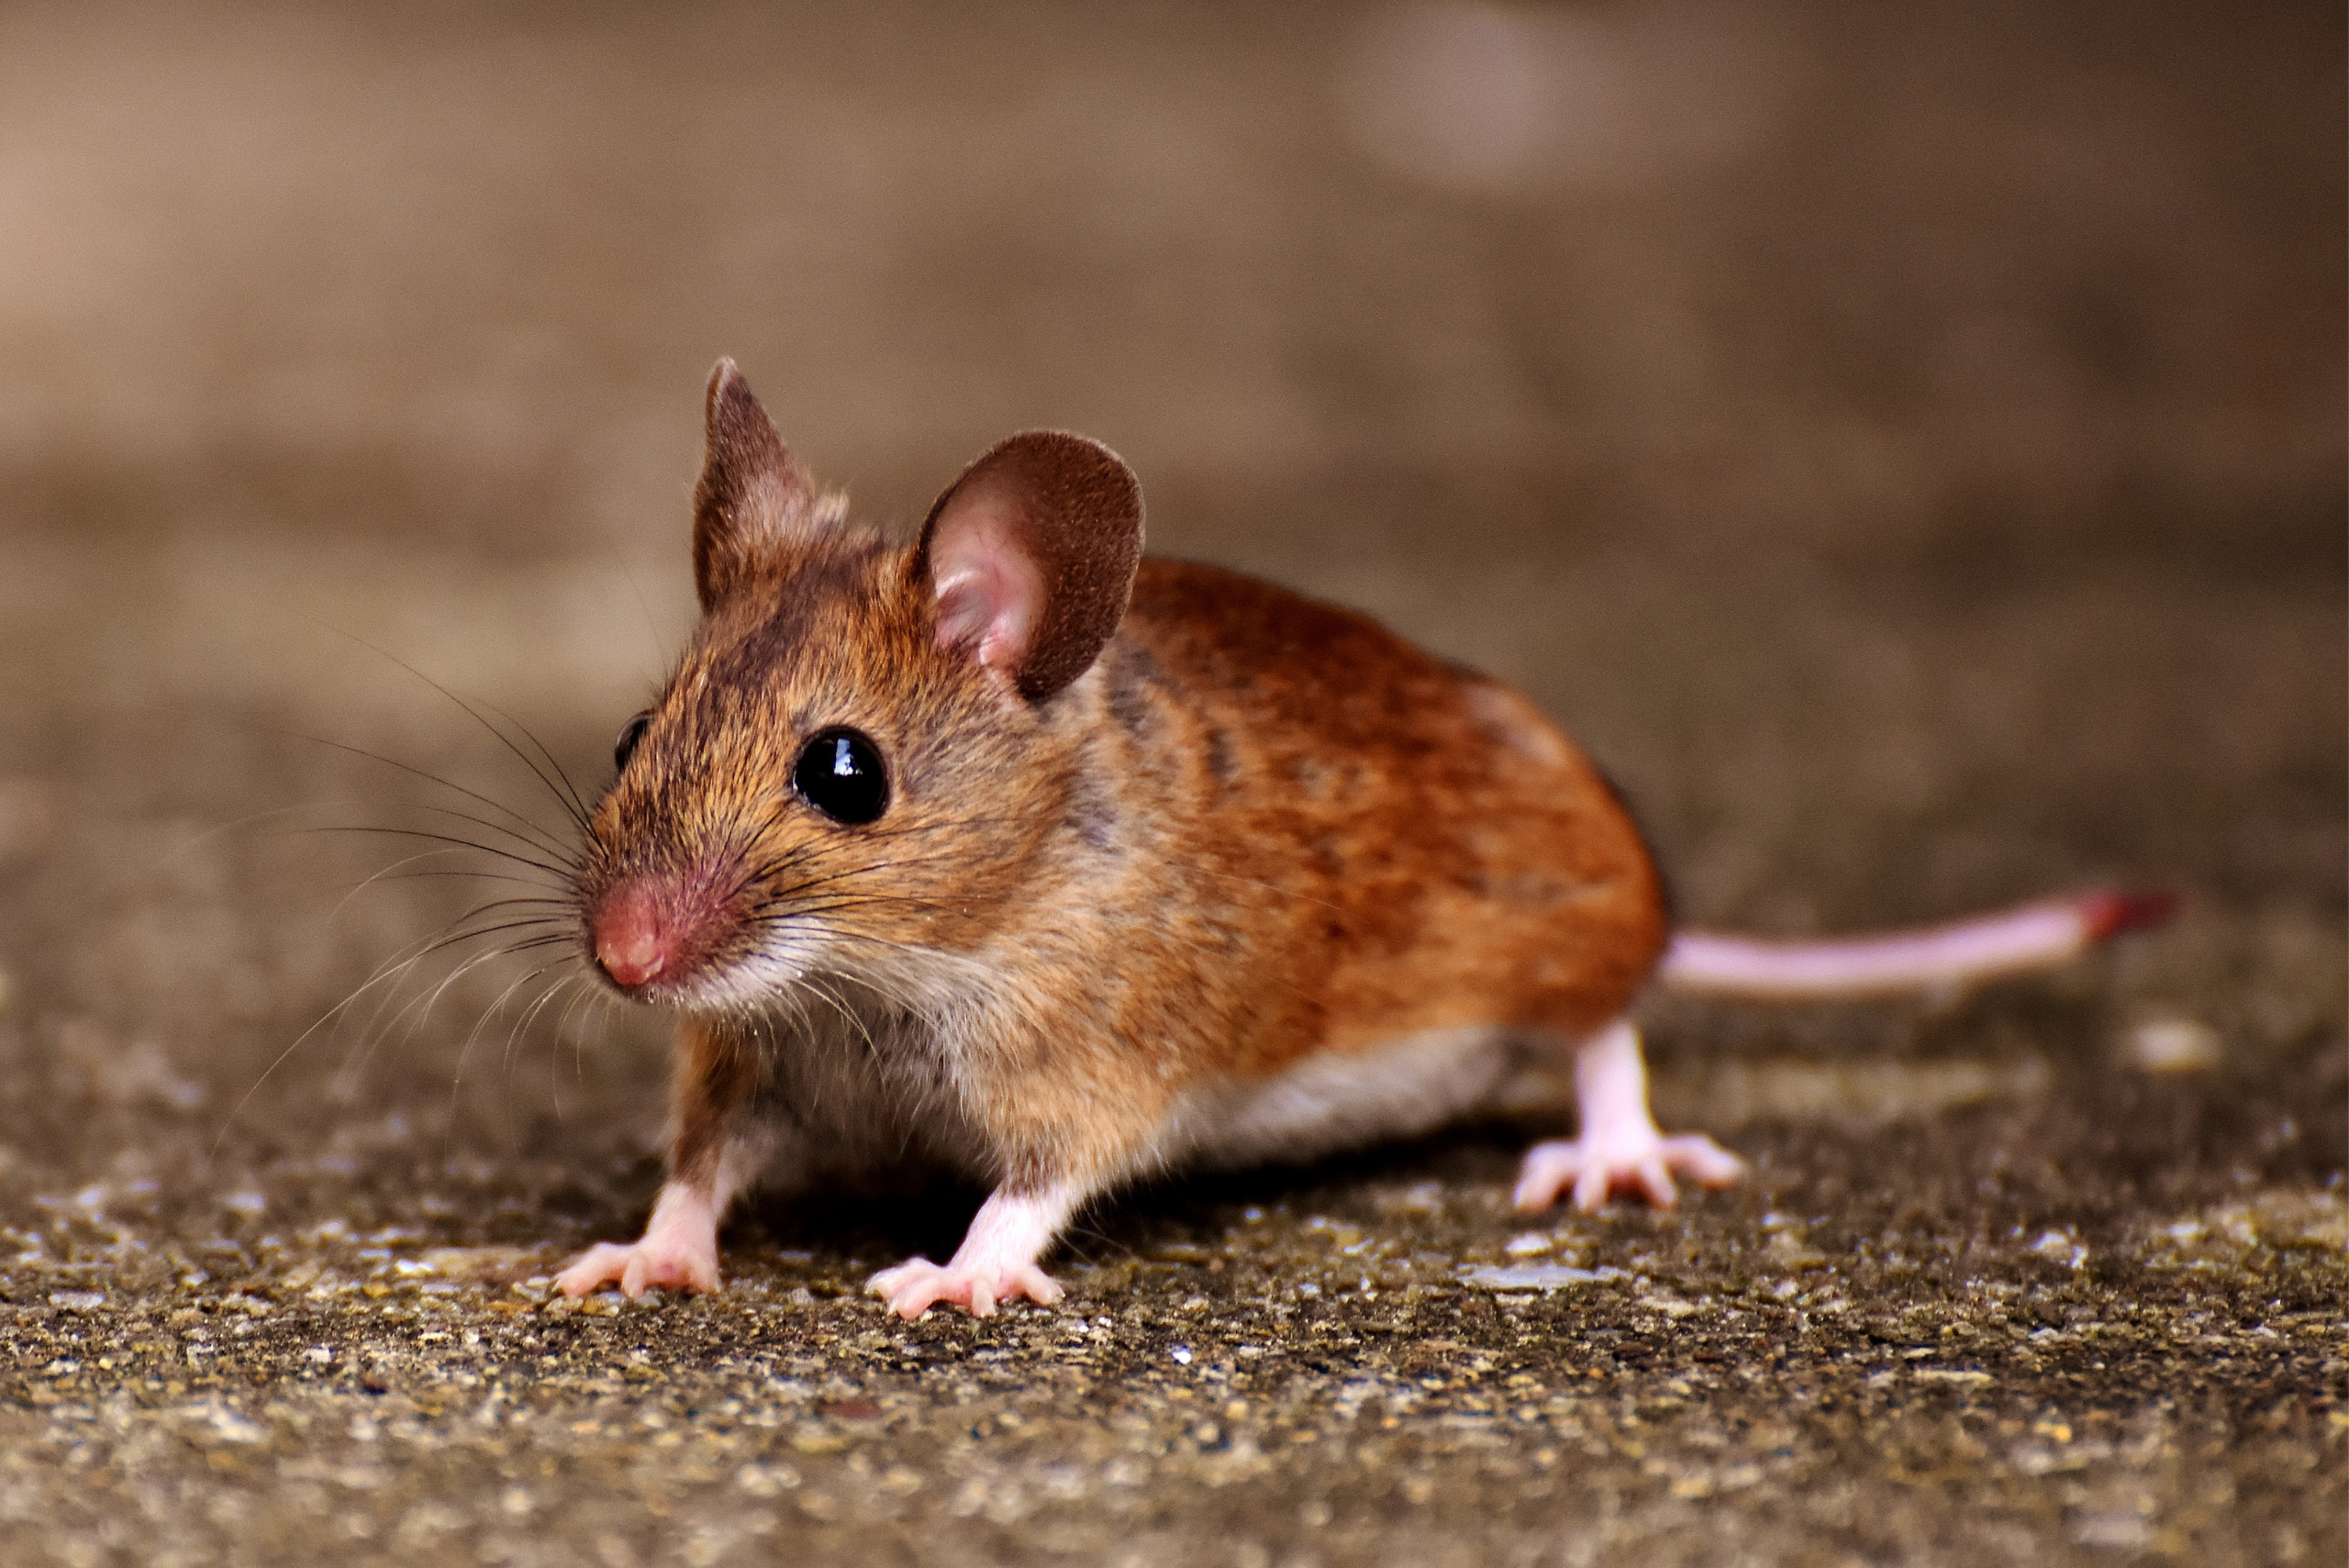 A closeup of a mouse.